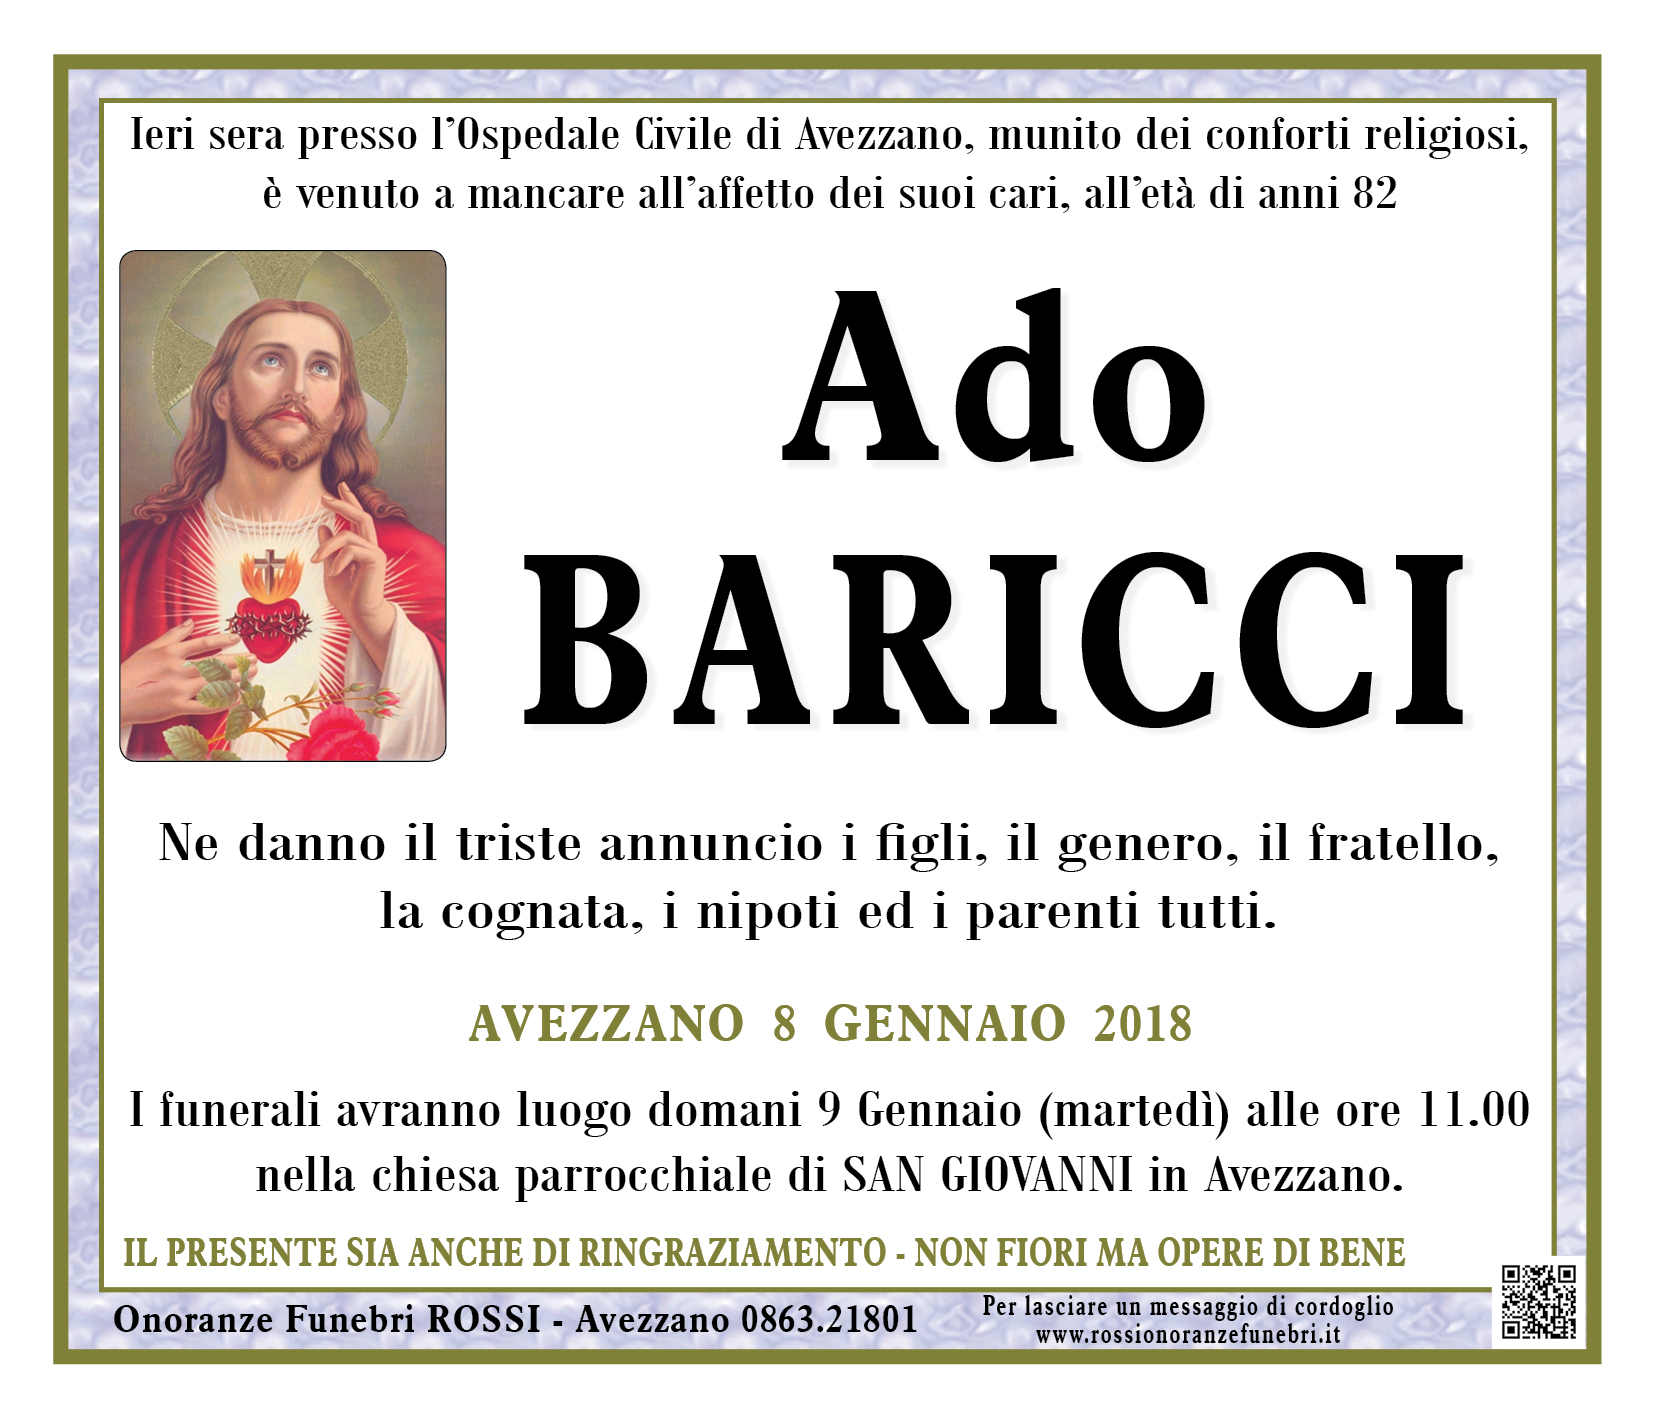 Ado Baricci